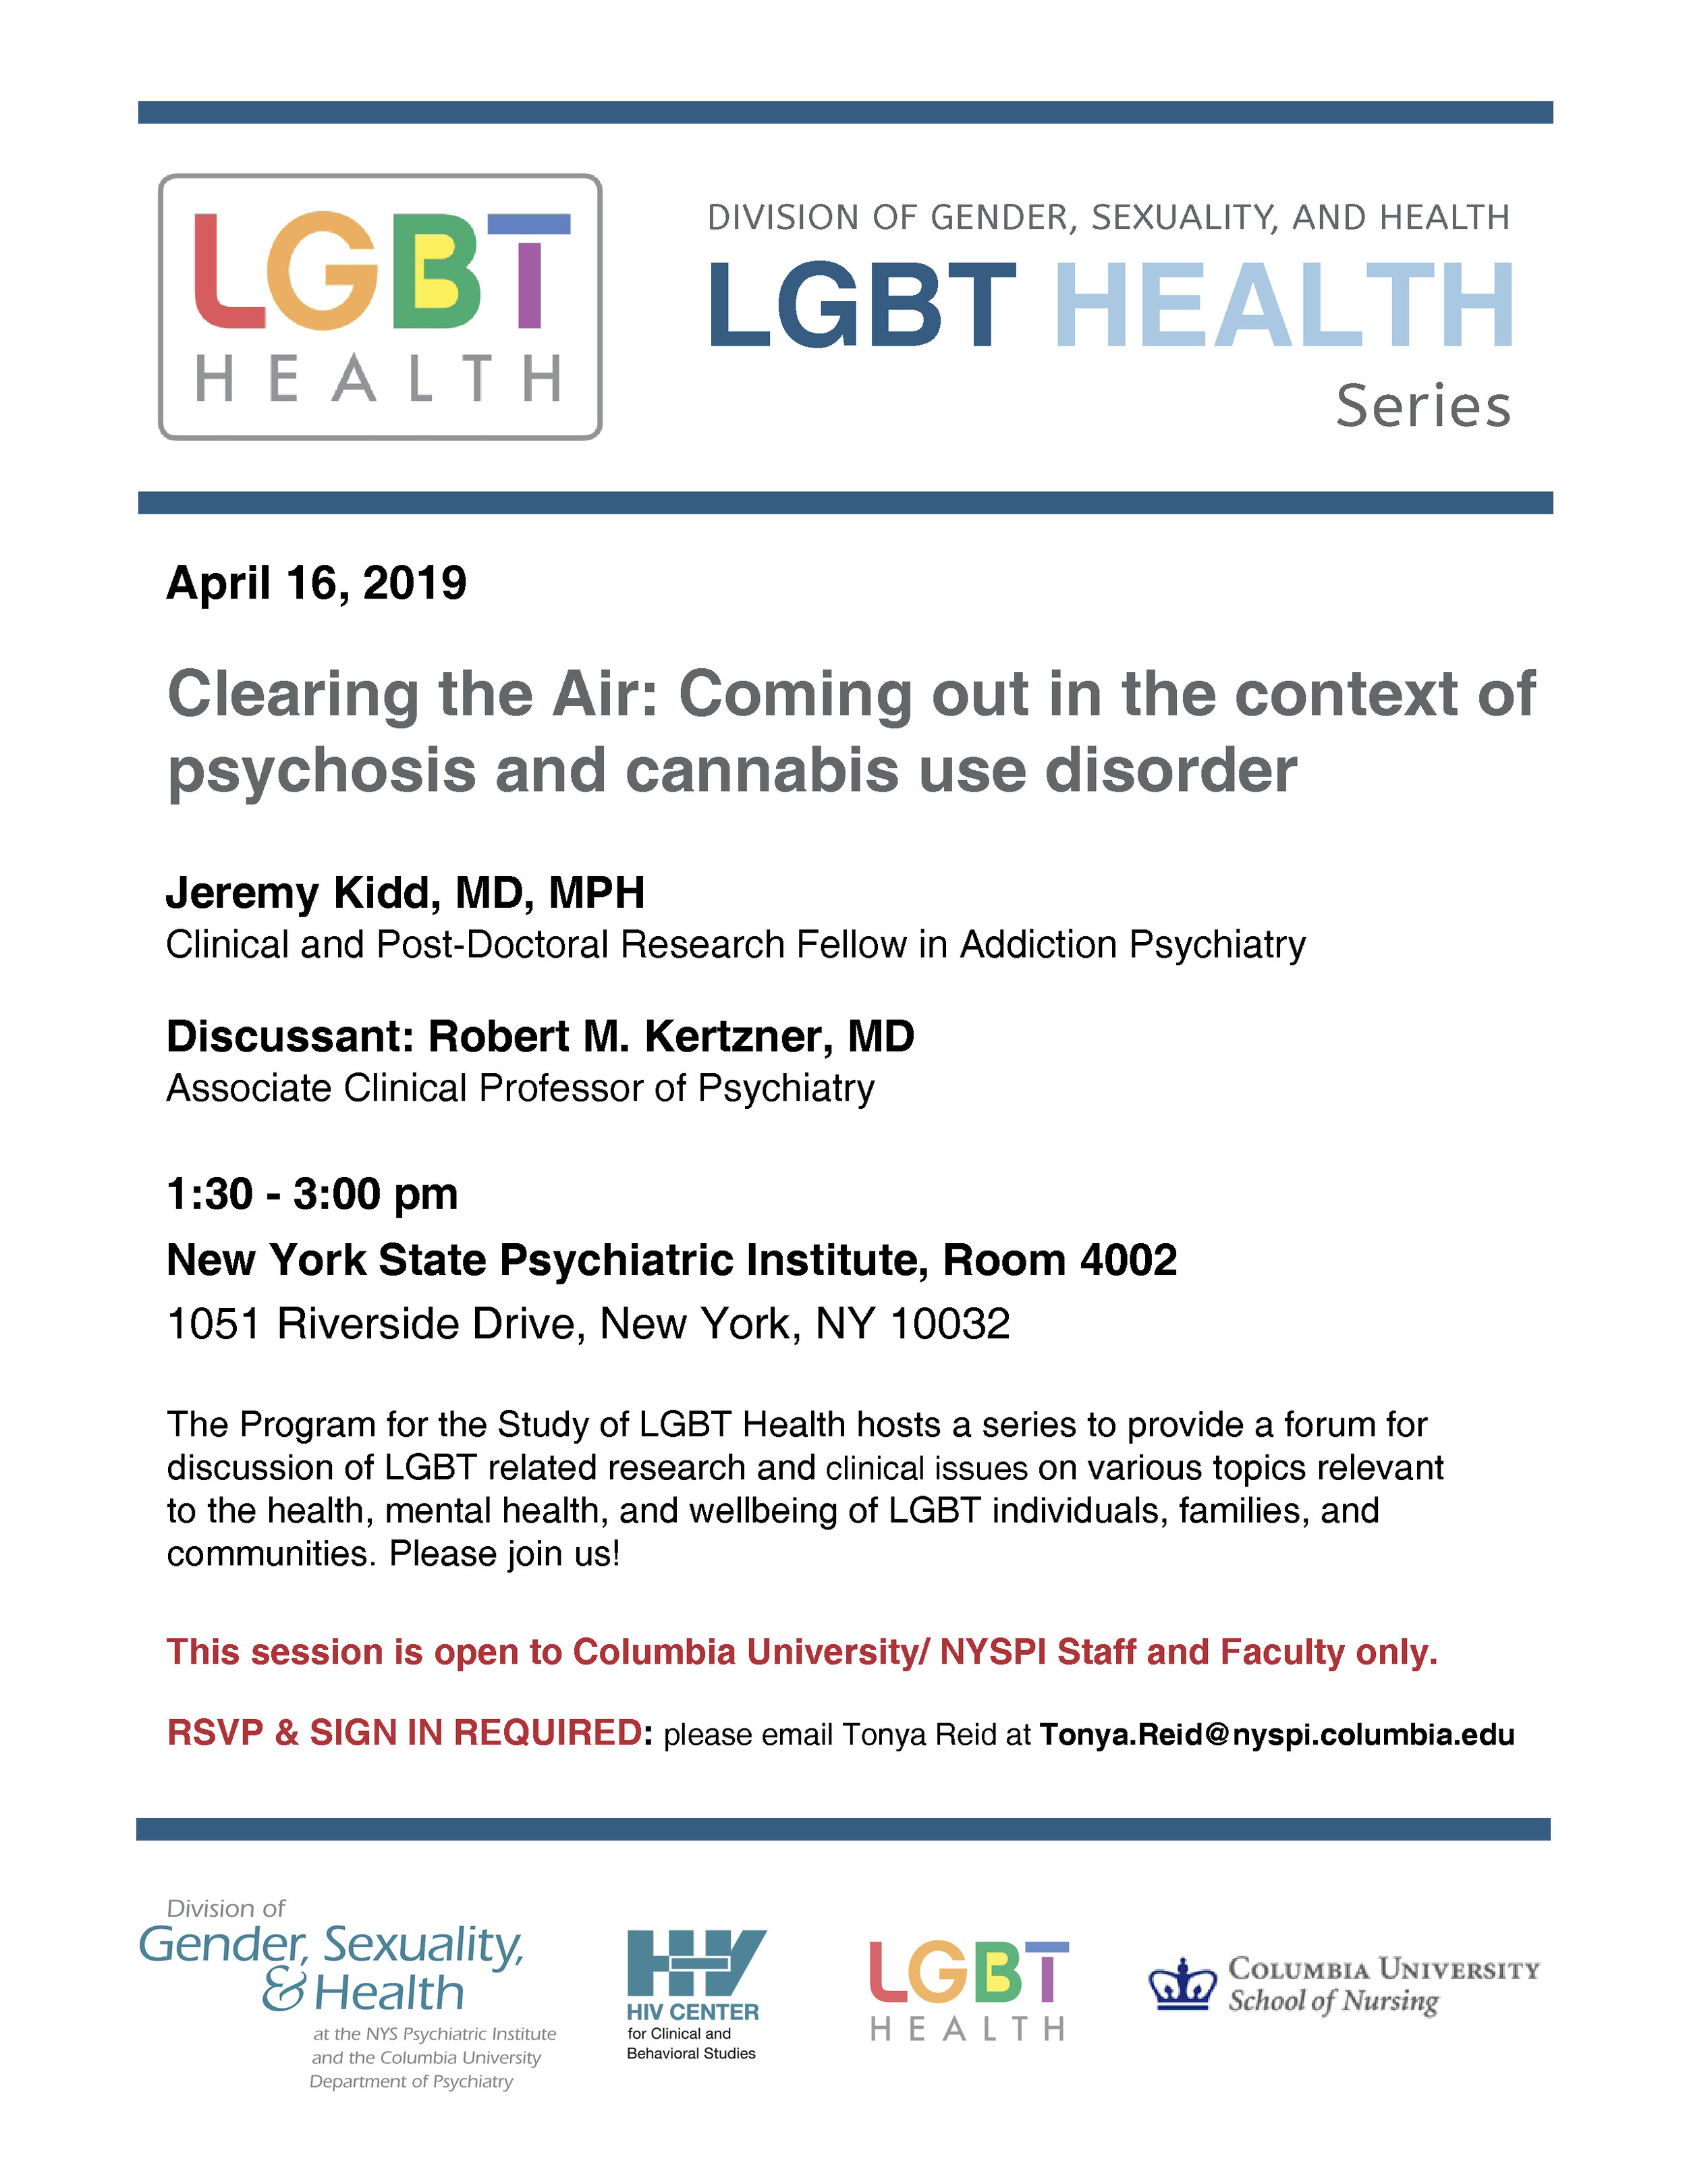 LGBT Health Series Apr 16 2019.jpg